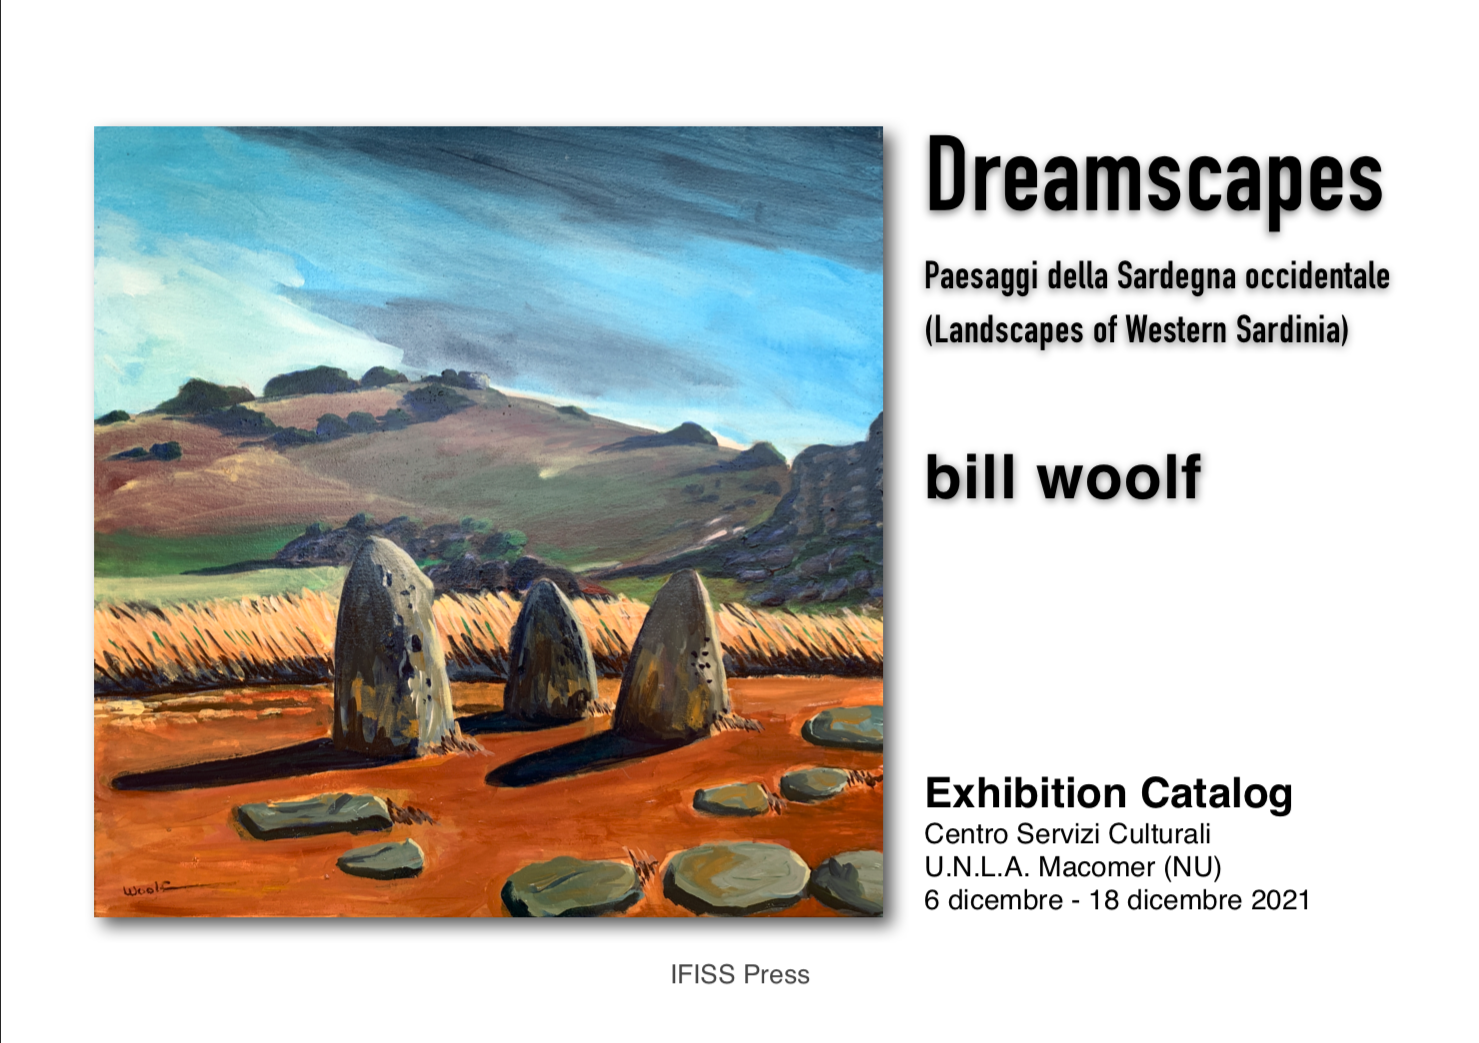 Free Dreamscapes exhibition catalog PDF